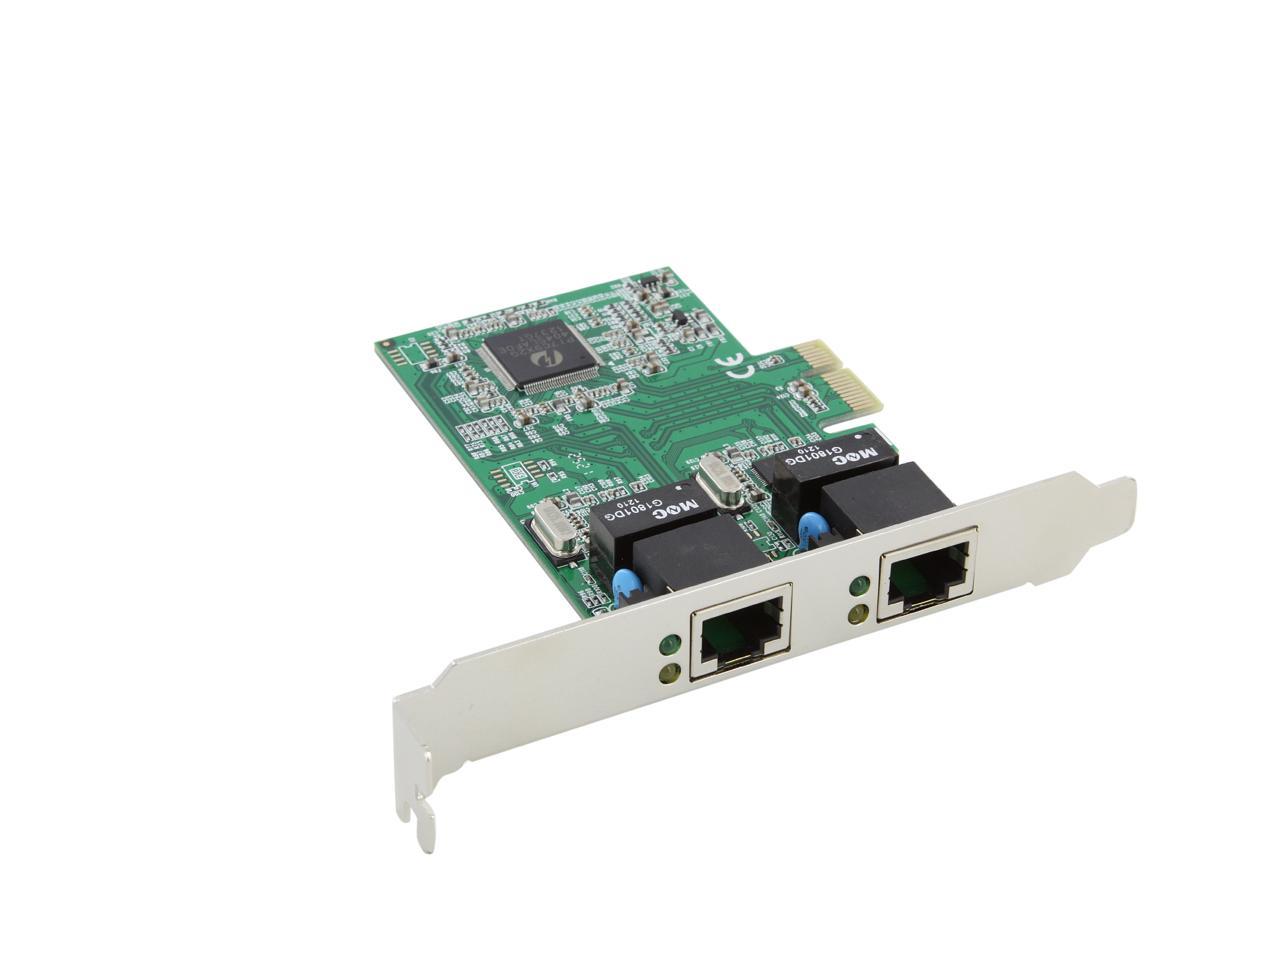 SD-PEX24033 Syba Dual LAN Ports 1000-Base T Gigabit Ethernet Card Realtek Chipset